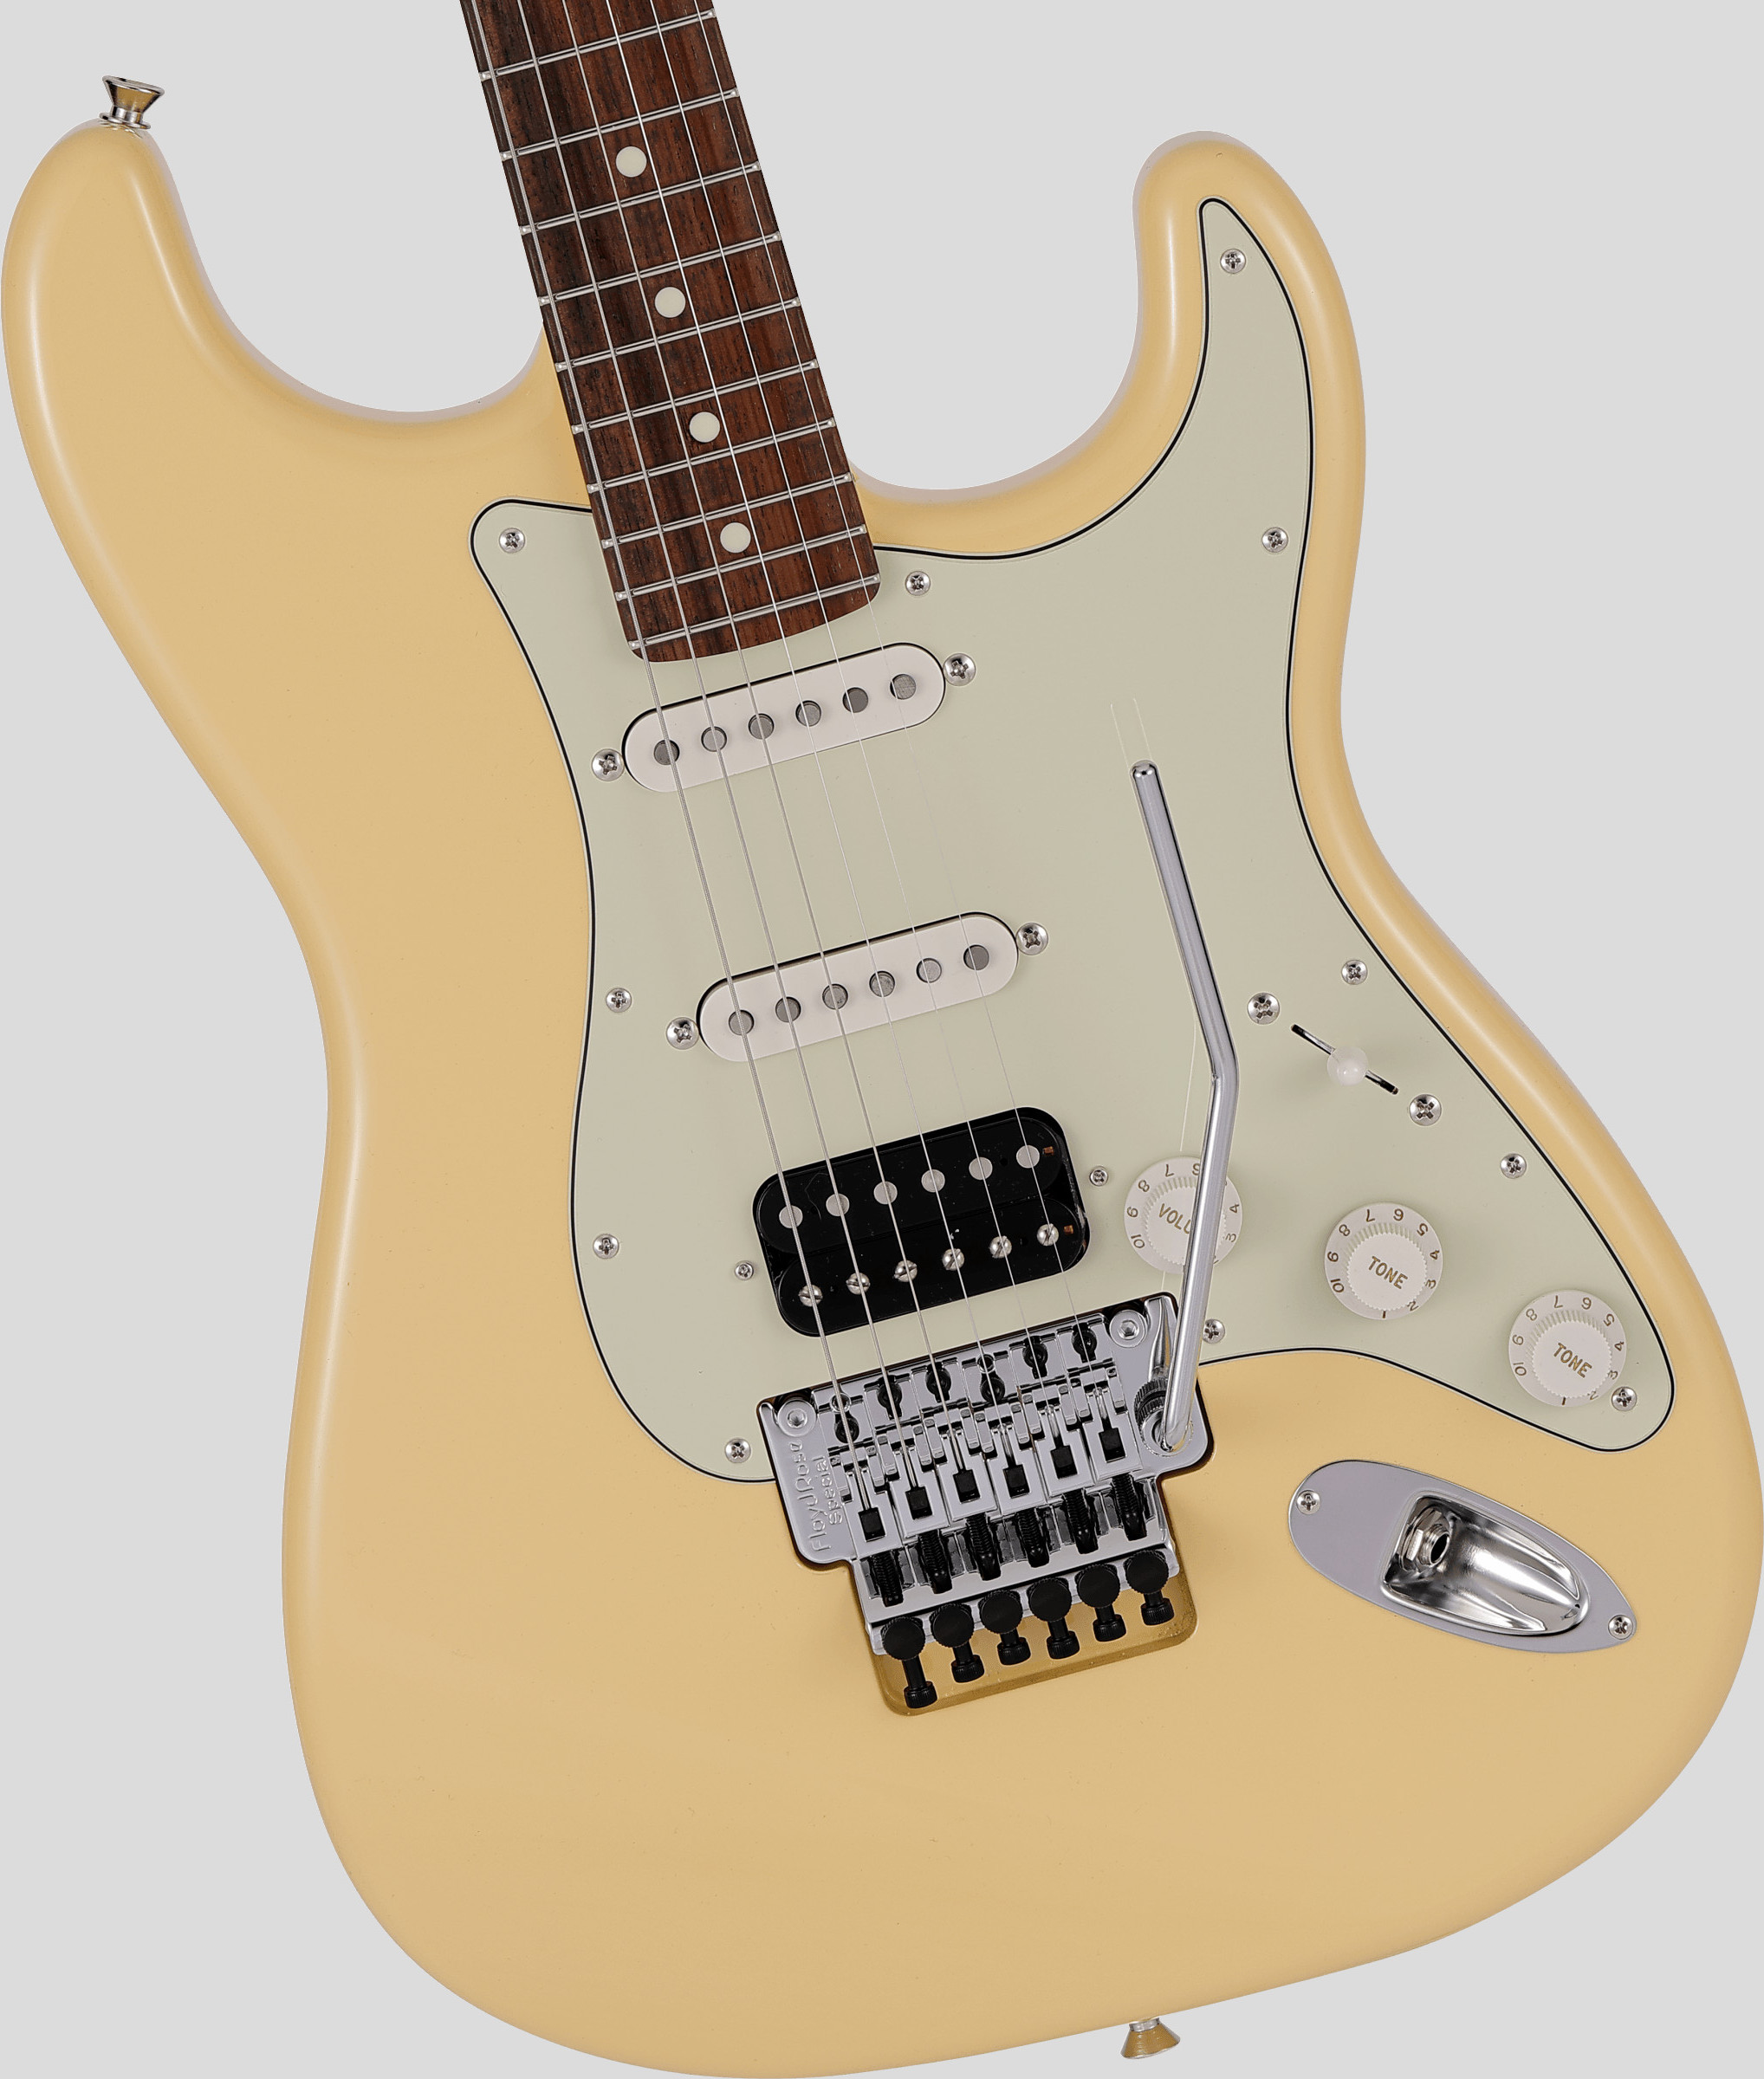 Fender Limited Edition Stratocaster Floyd Rose Vintage White 4